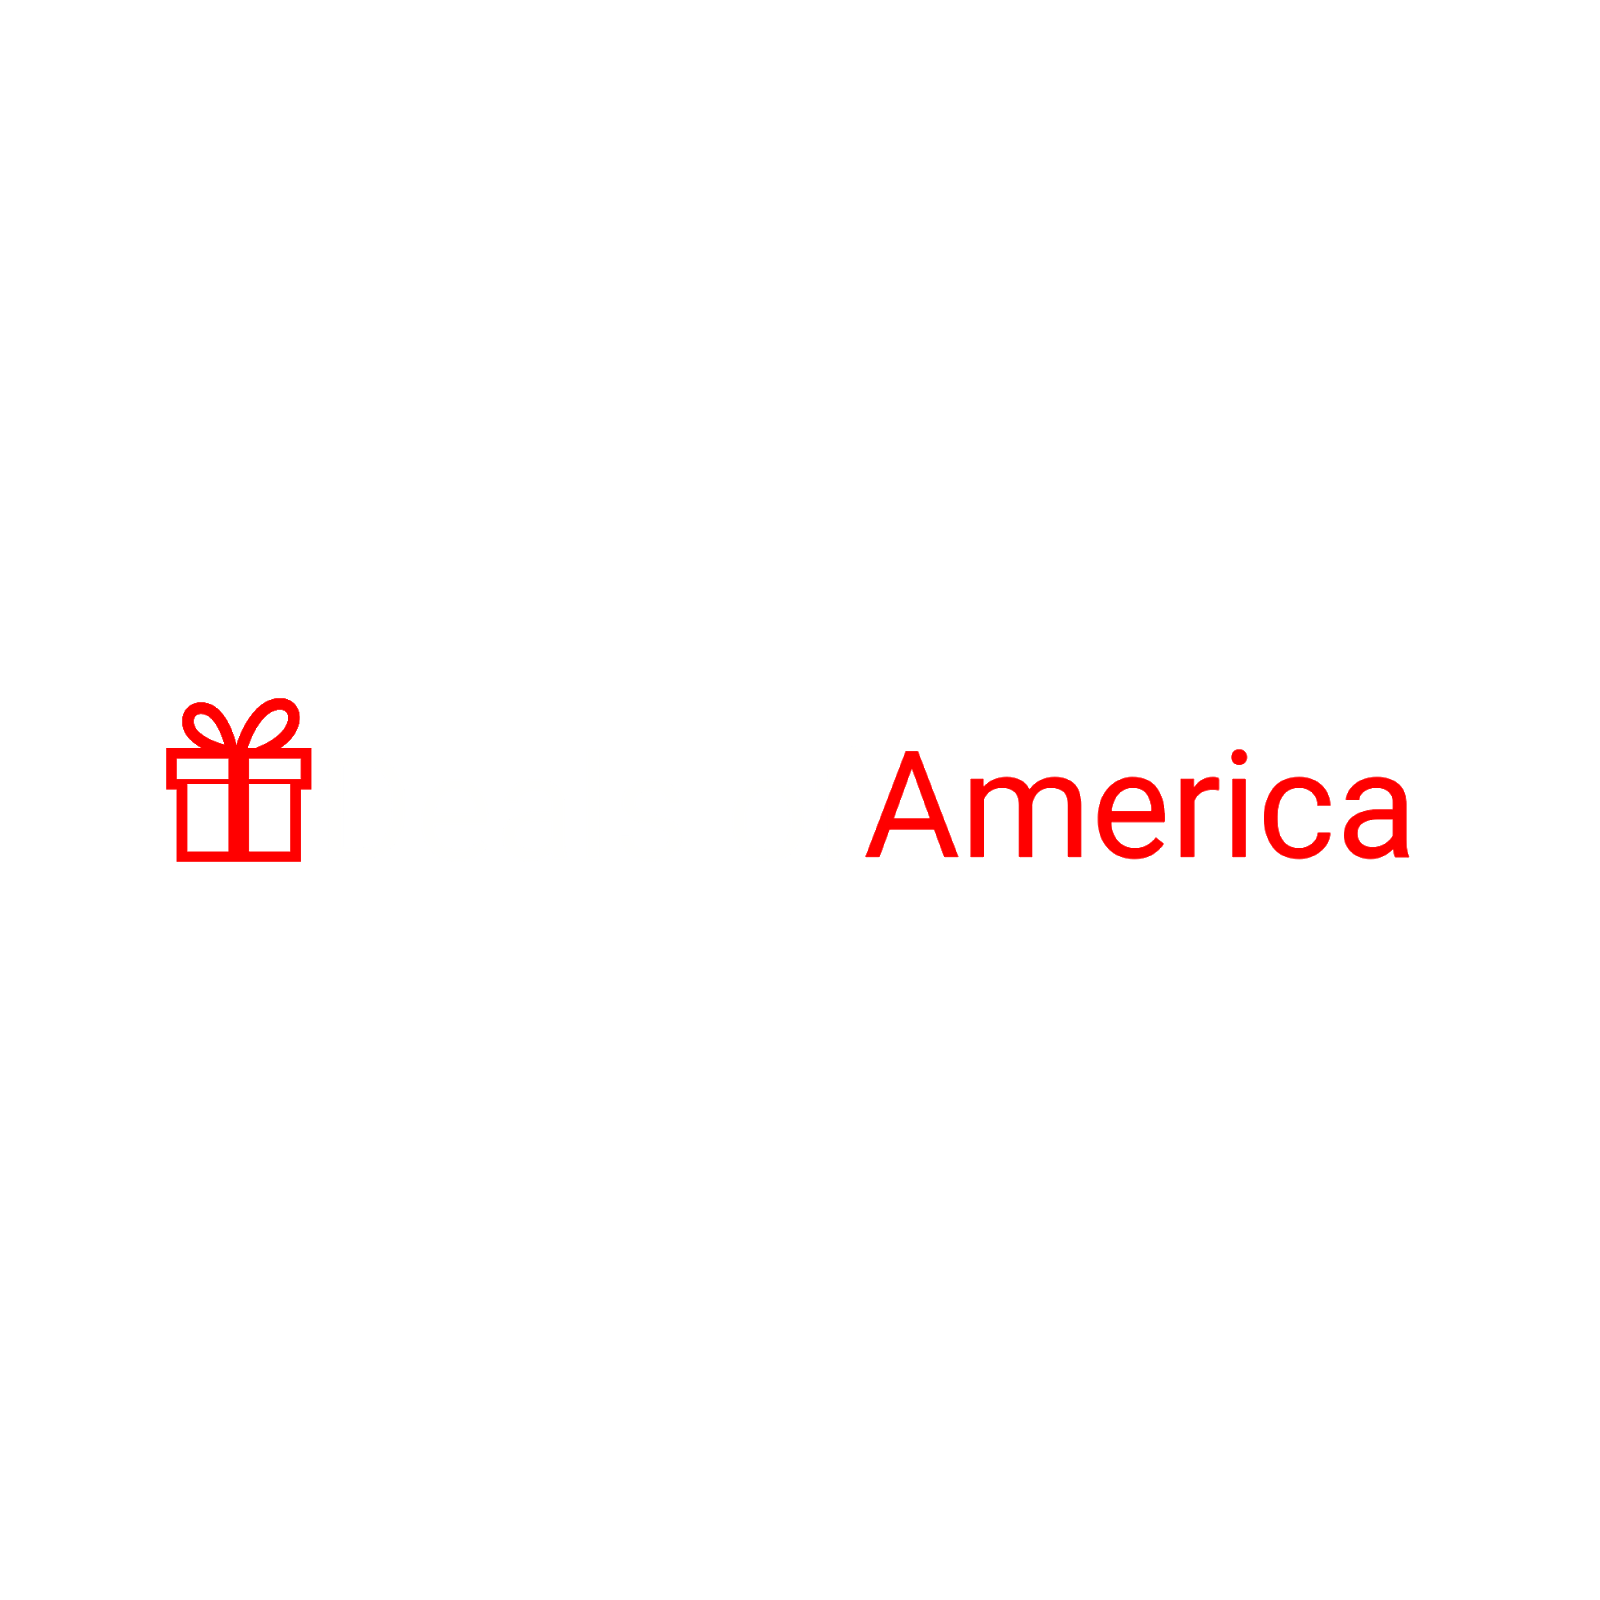 Deals of America